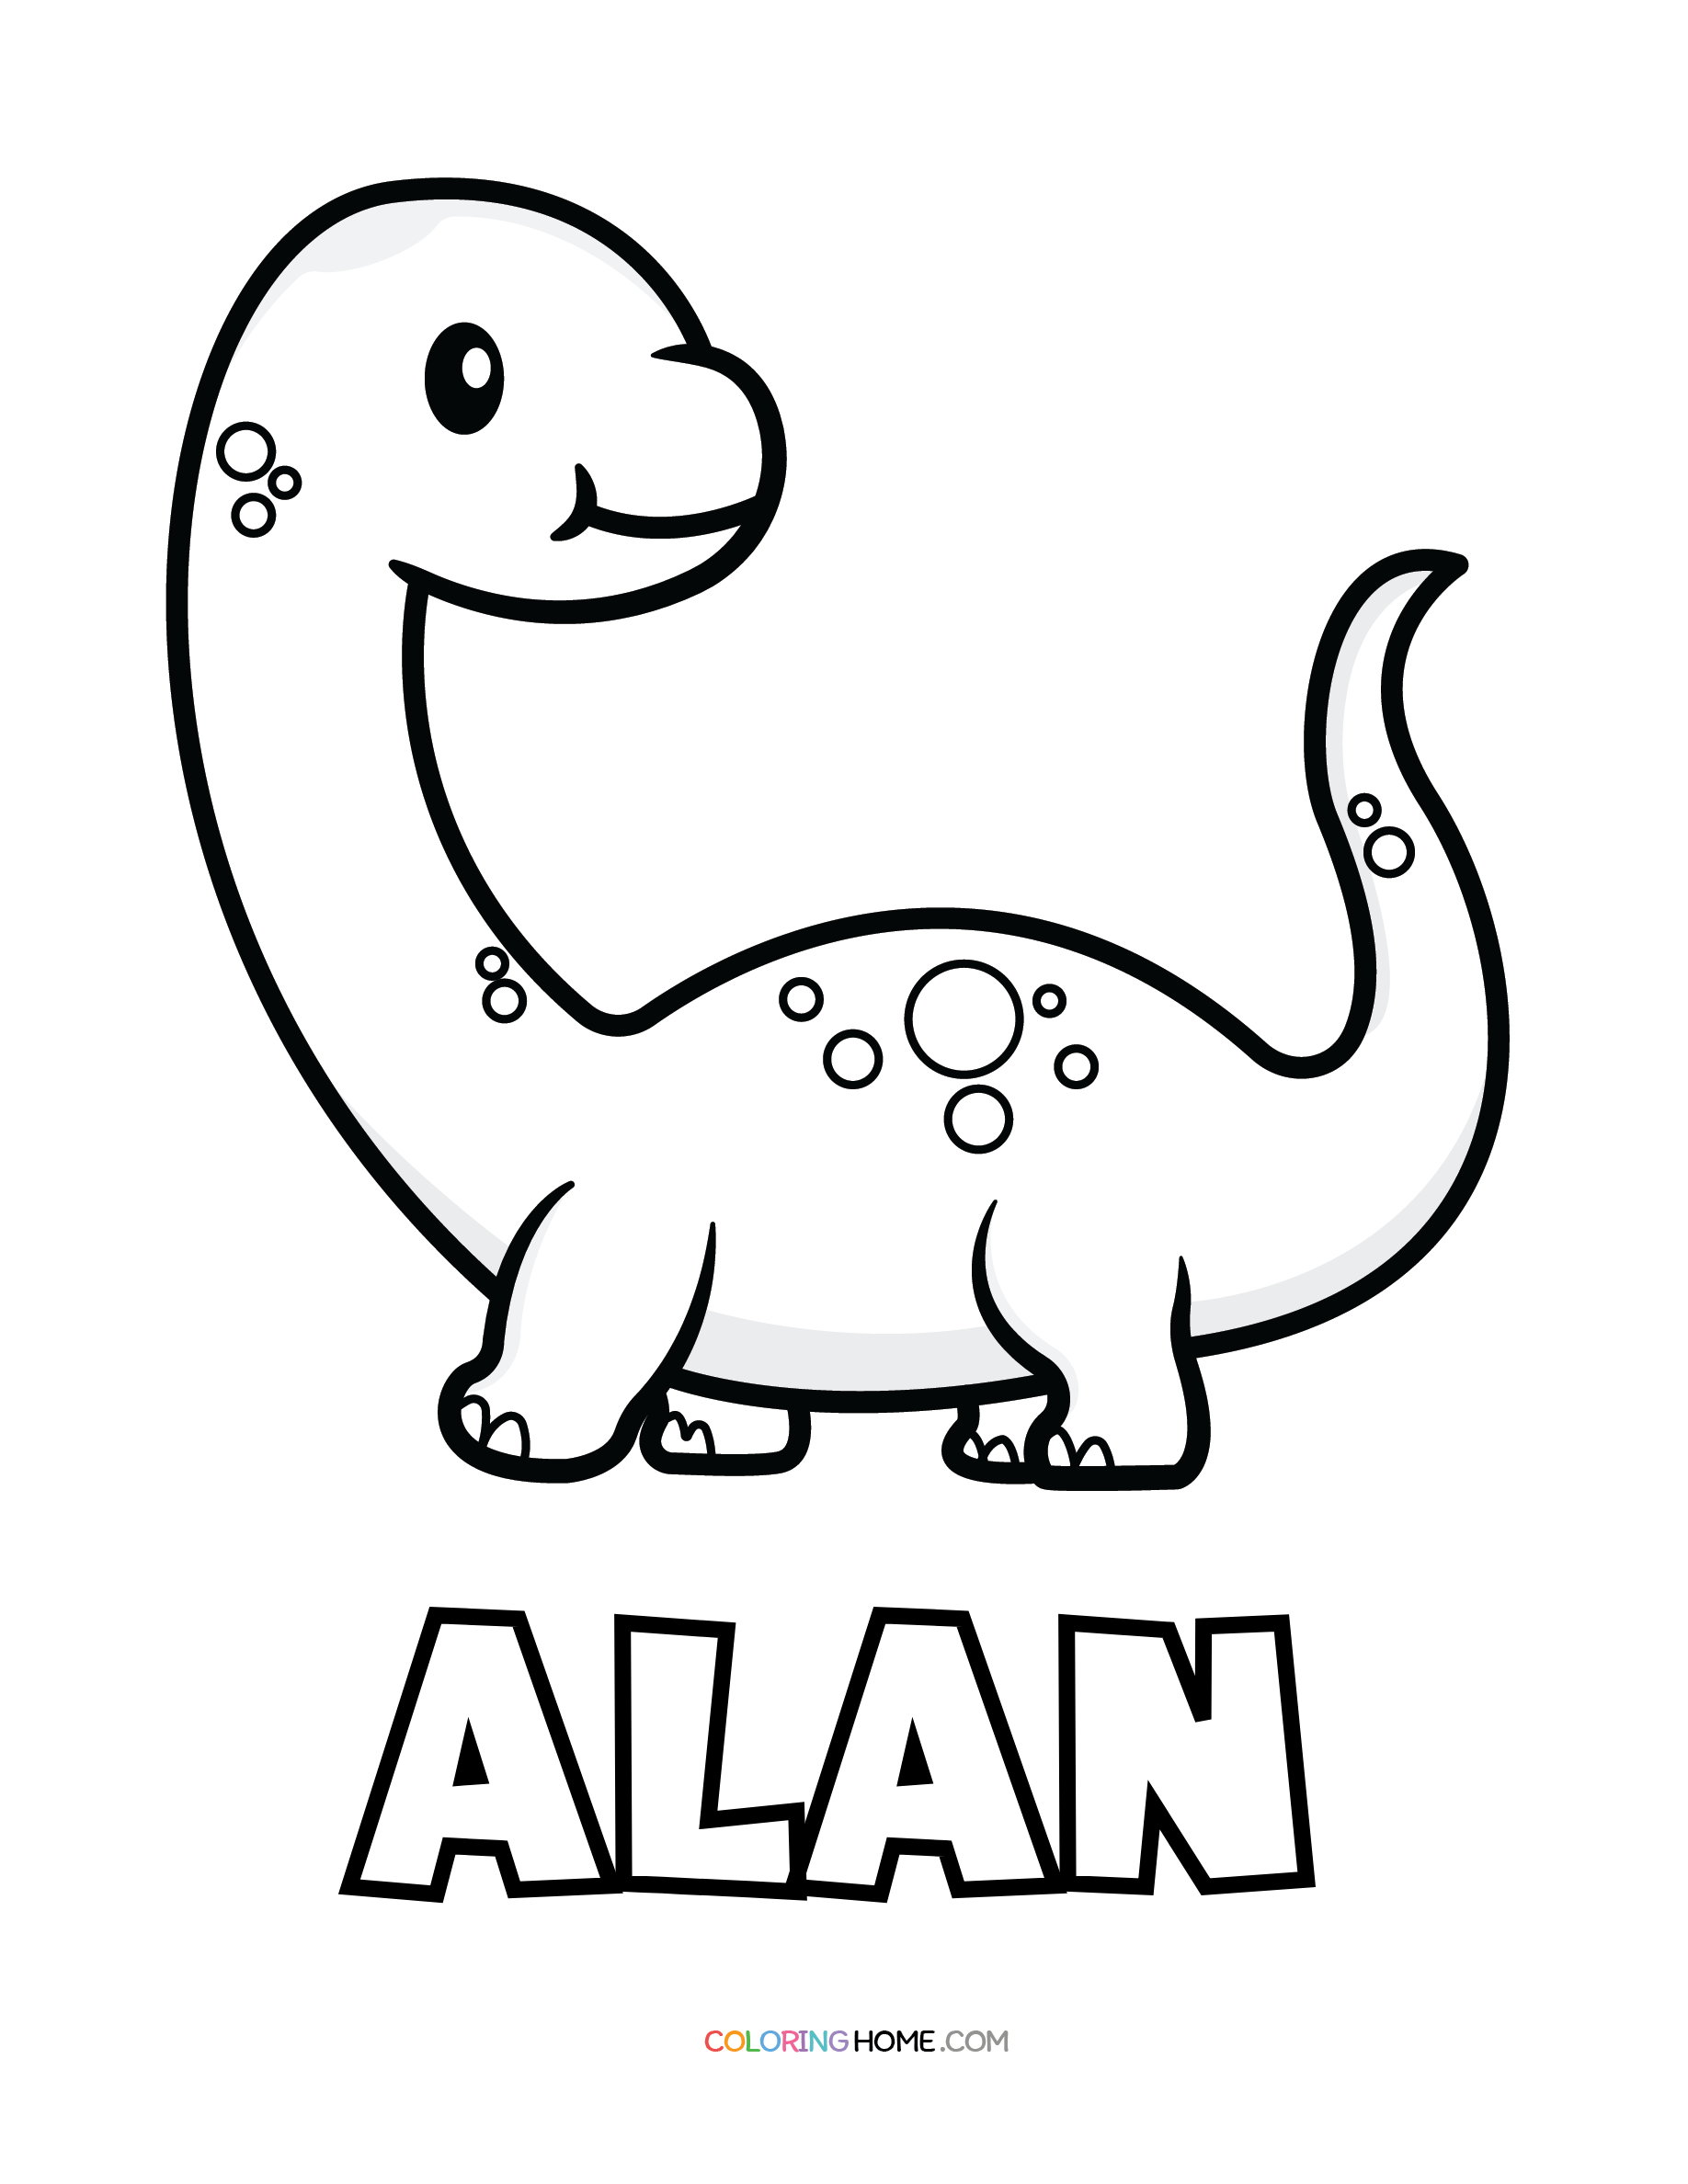 Alan dinosaur coloring page